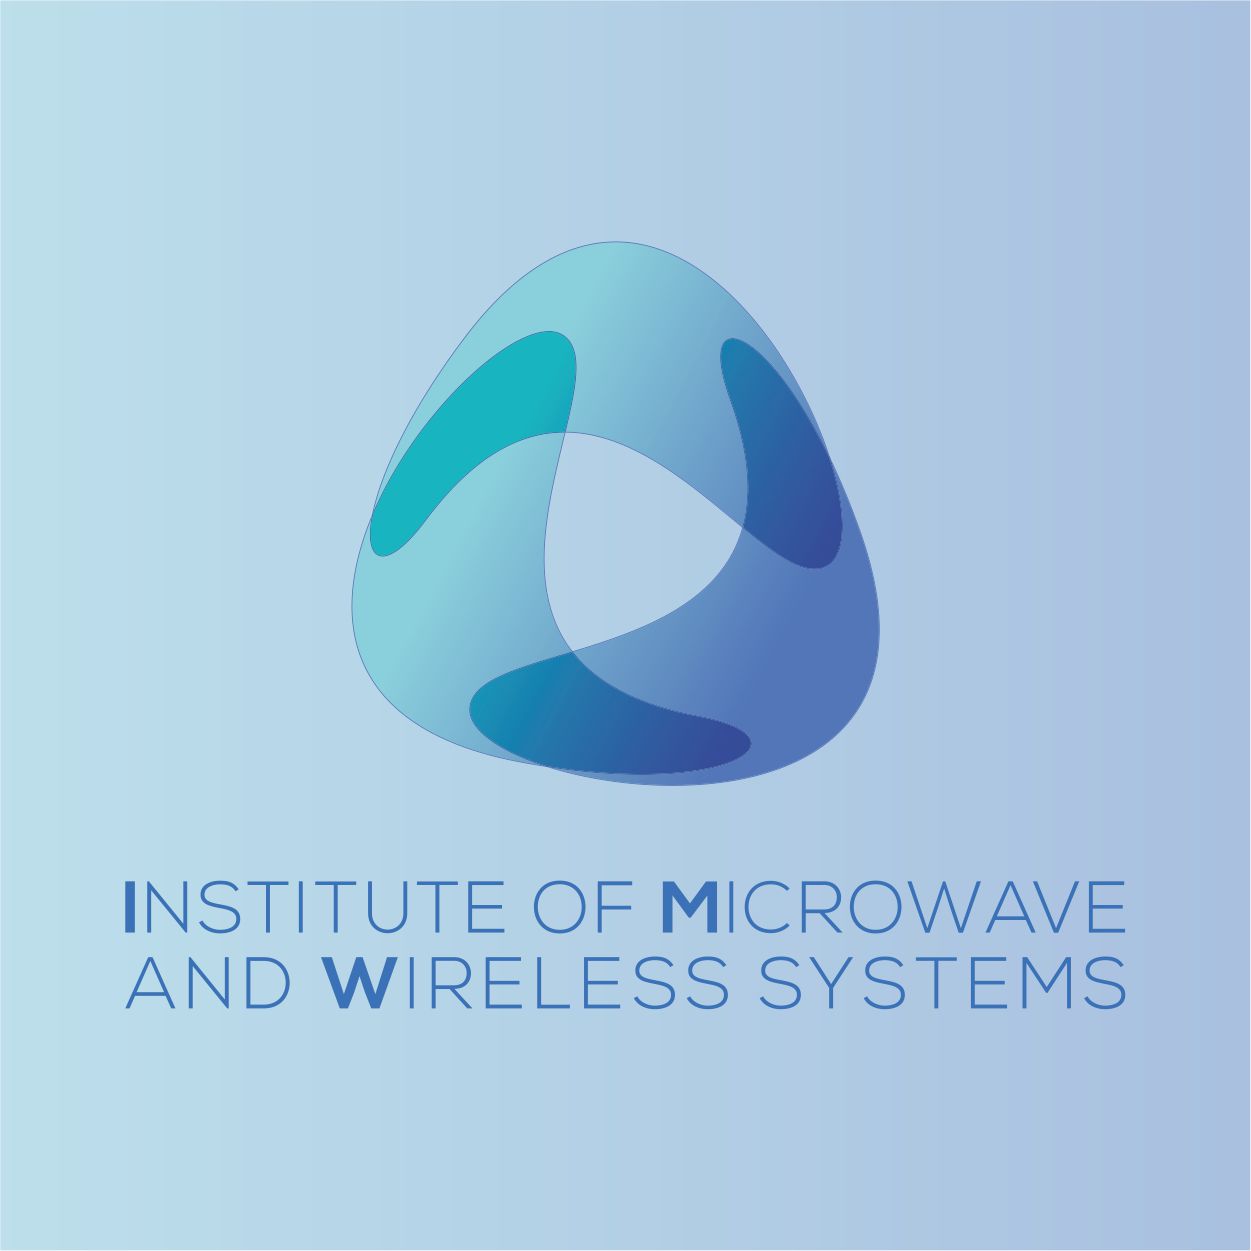 Institute of microwave